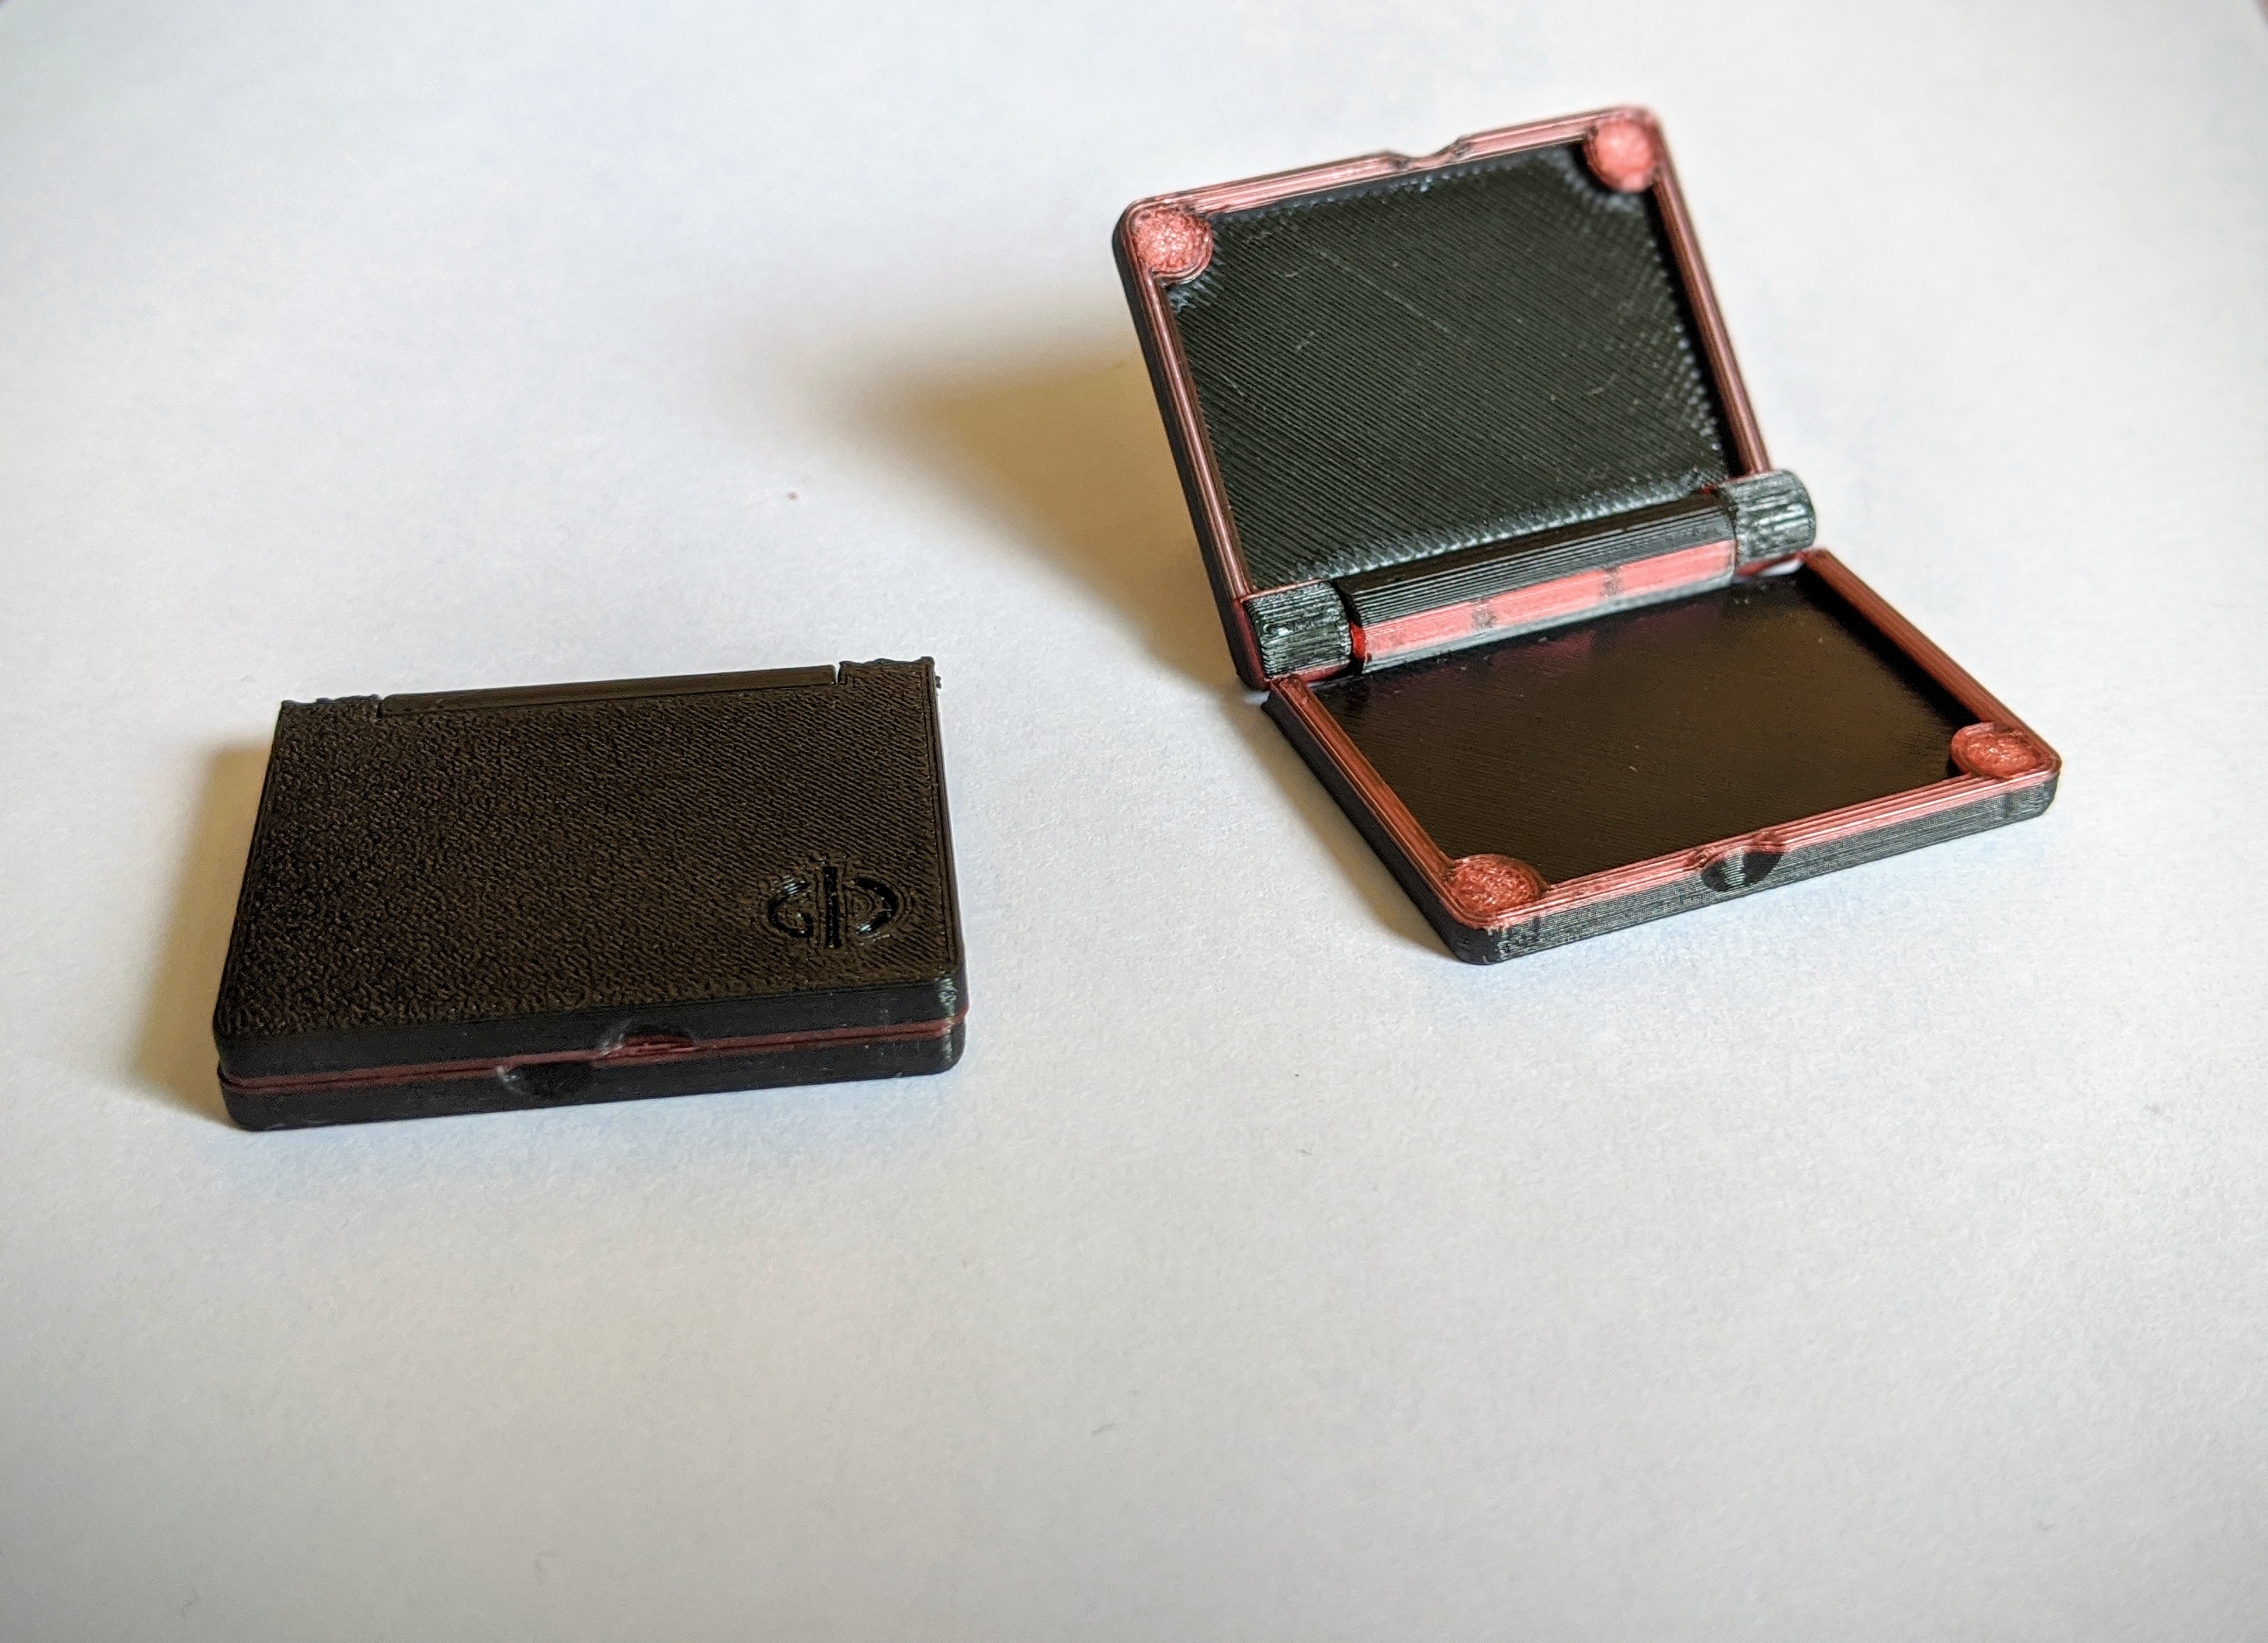 Mini box: magnetic hinge and closure